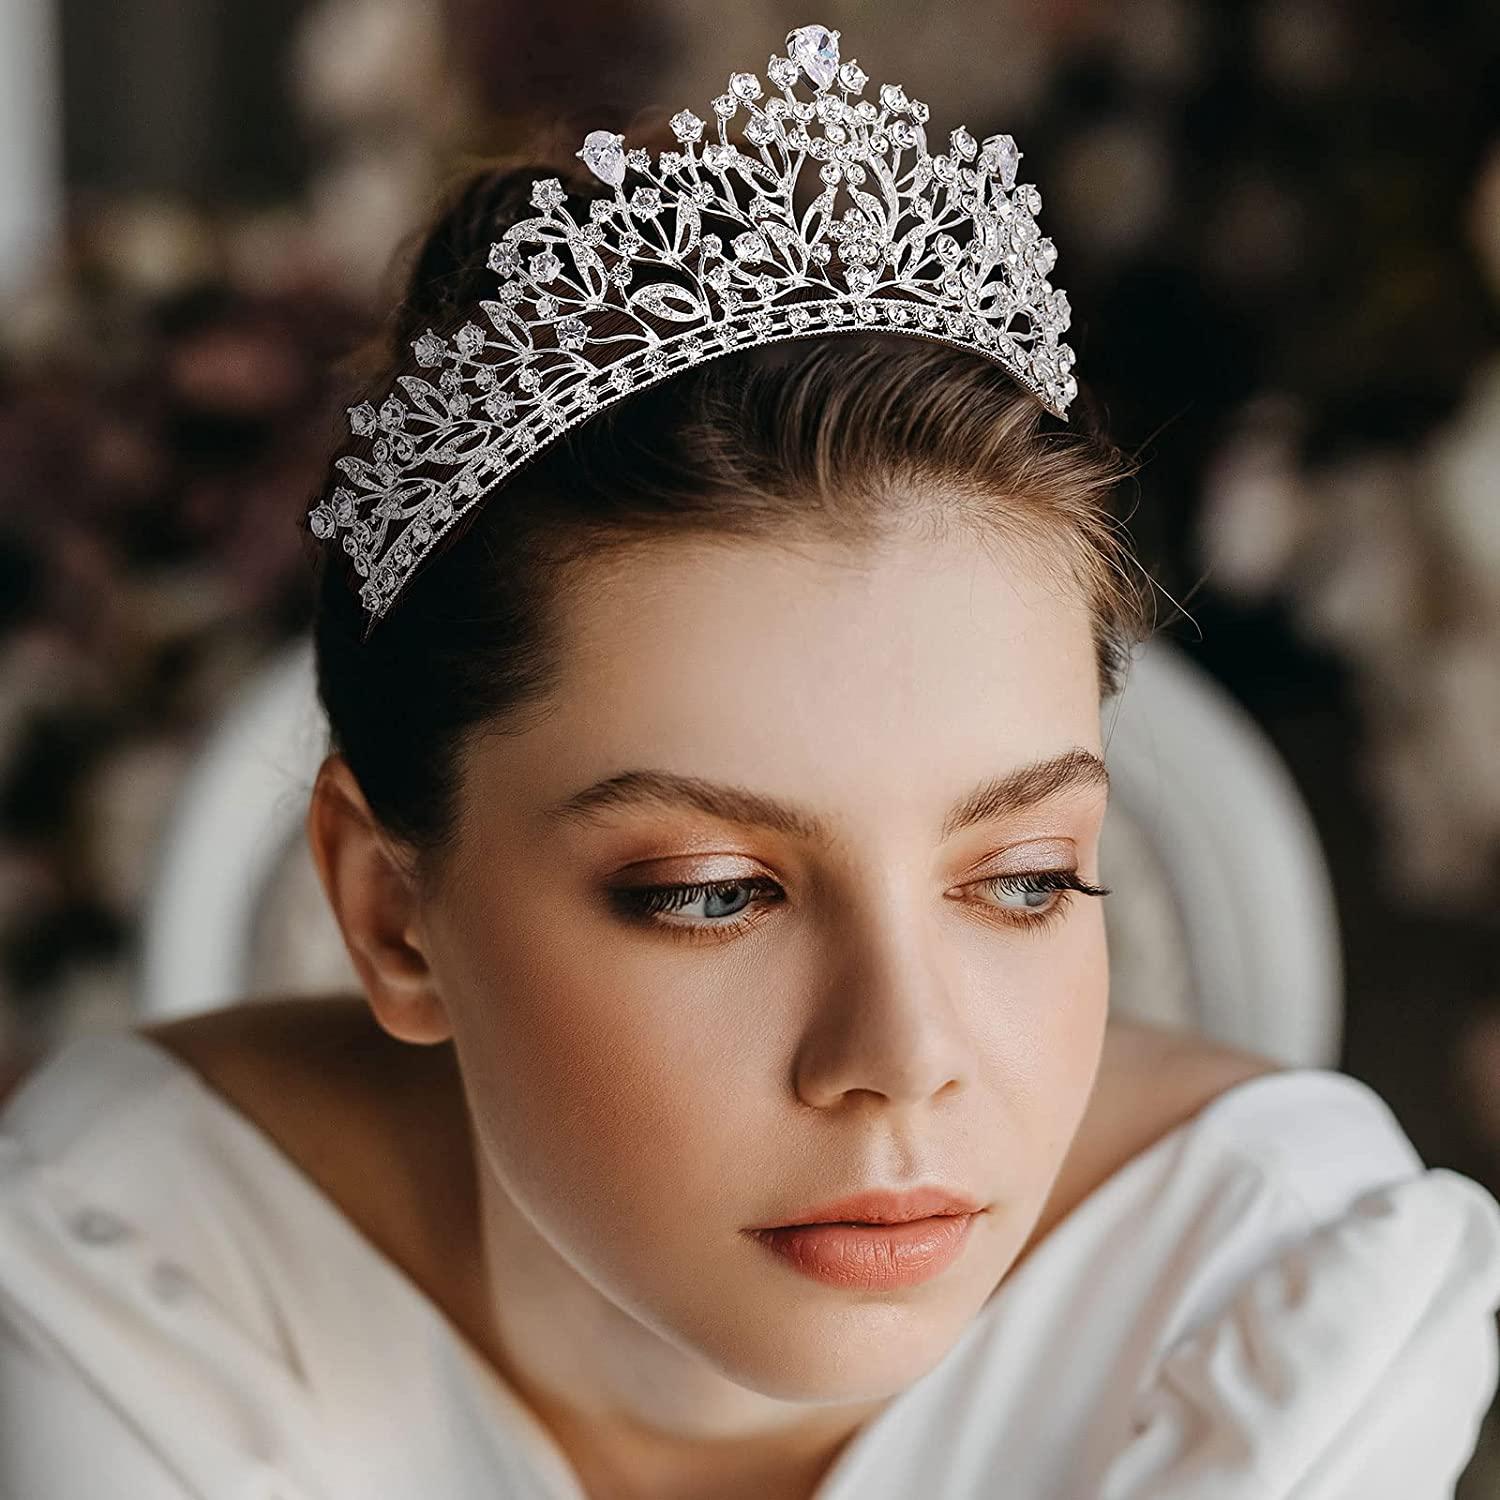 AW BRIDAL Wedding Tiaras and Crowns for Women Crystal Princess